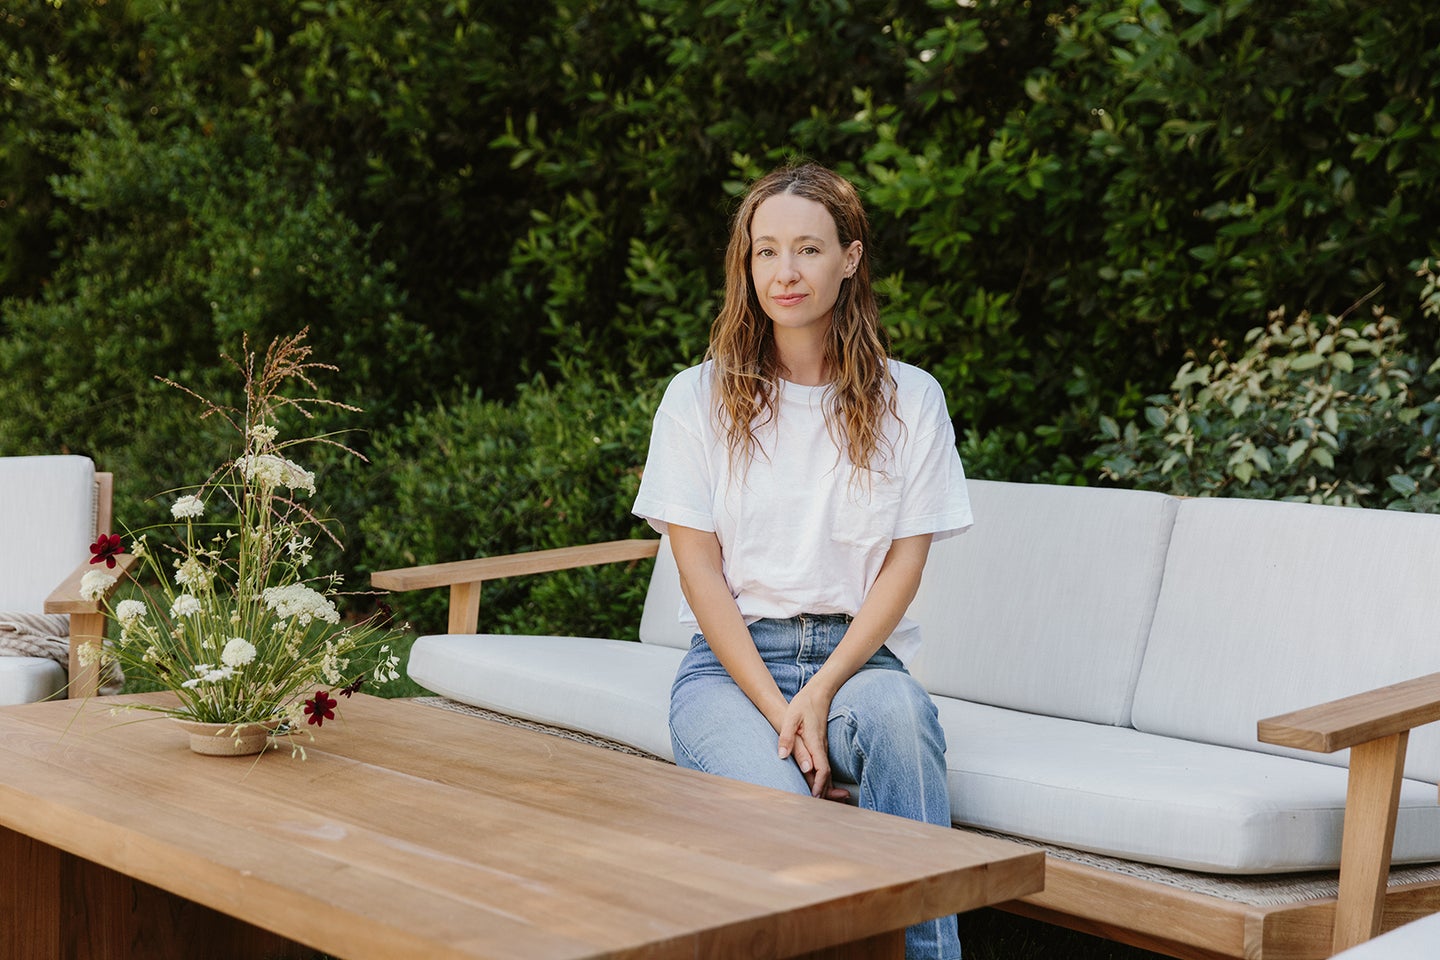 Jenni Kayne sitting on an outdoor sofa